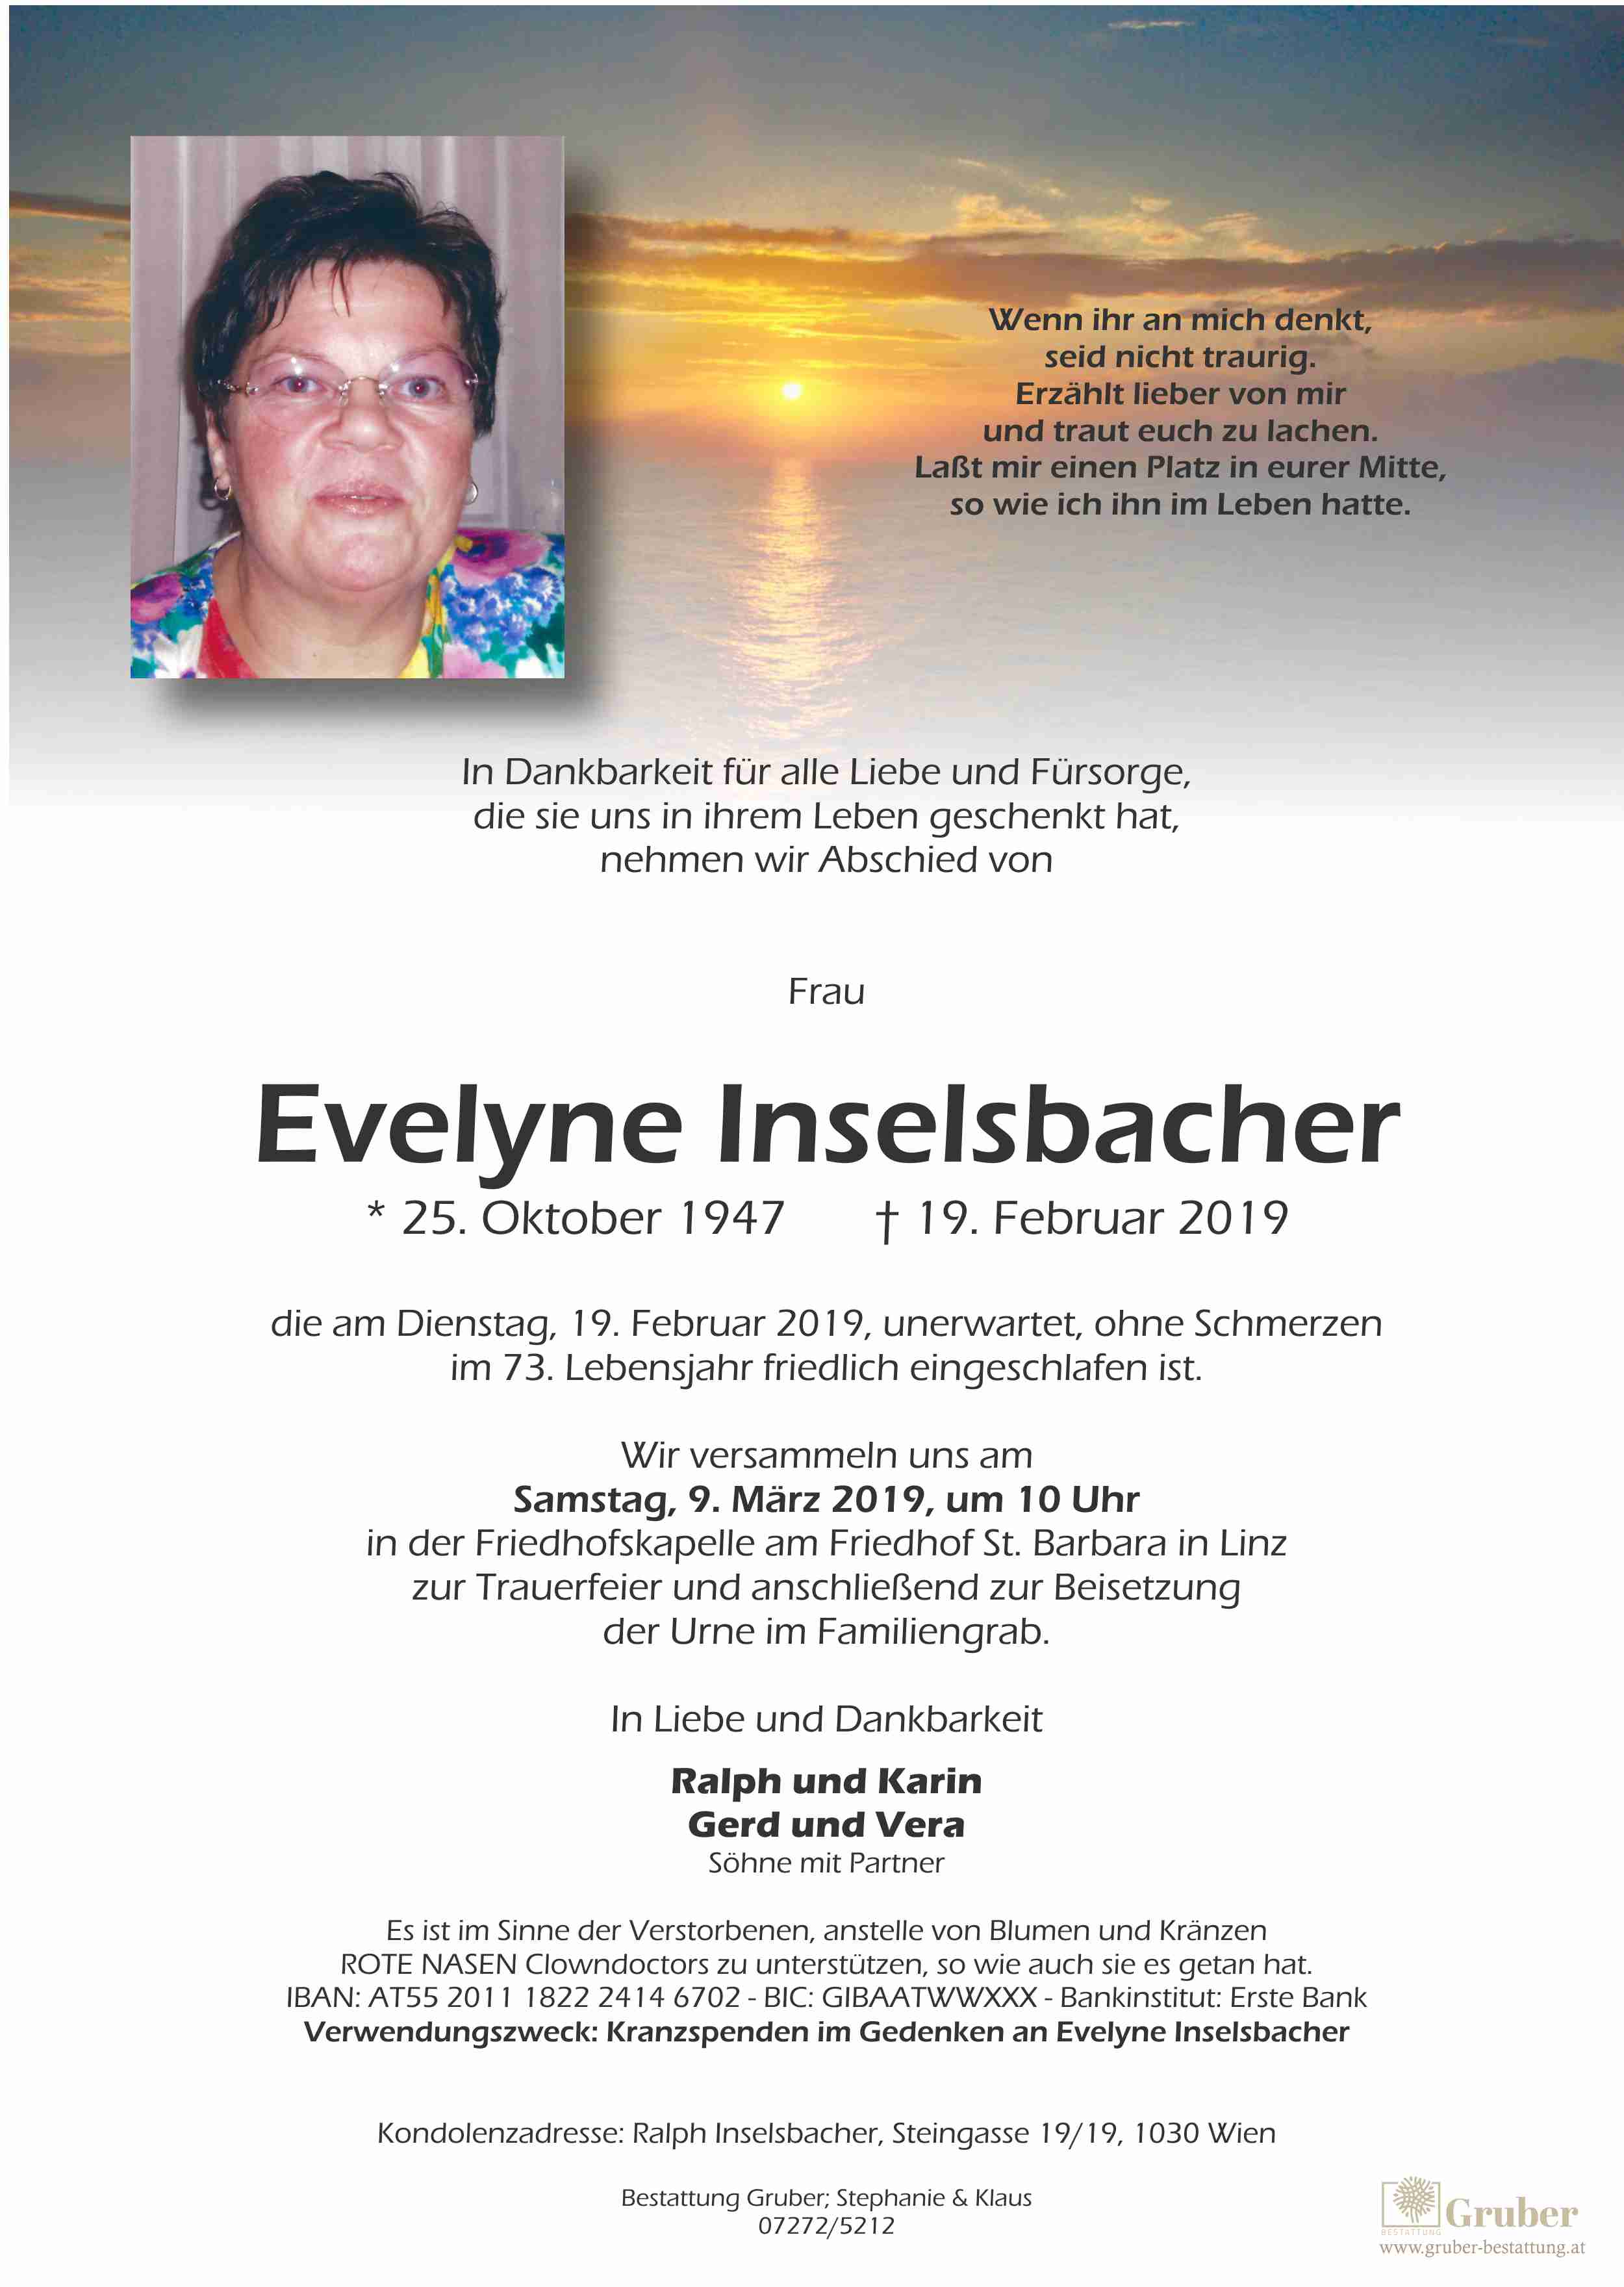 Evelyne Inselsbacher (Linz)